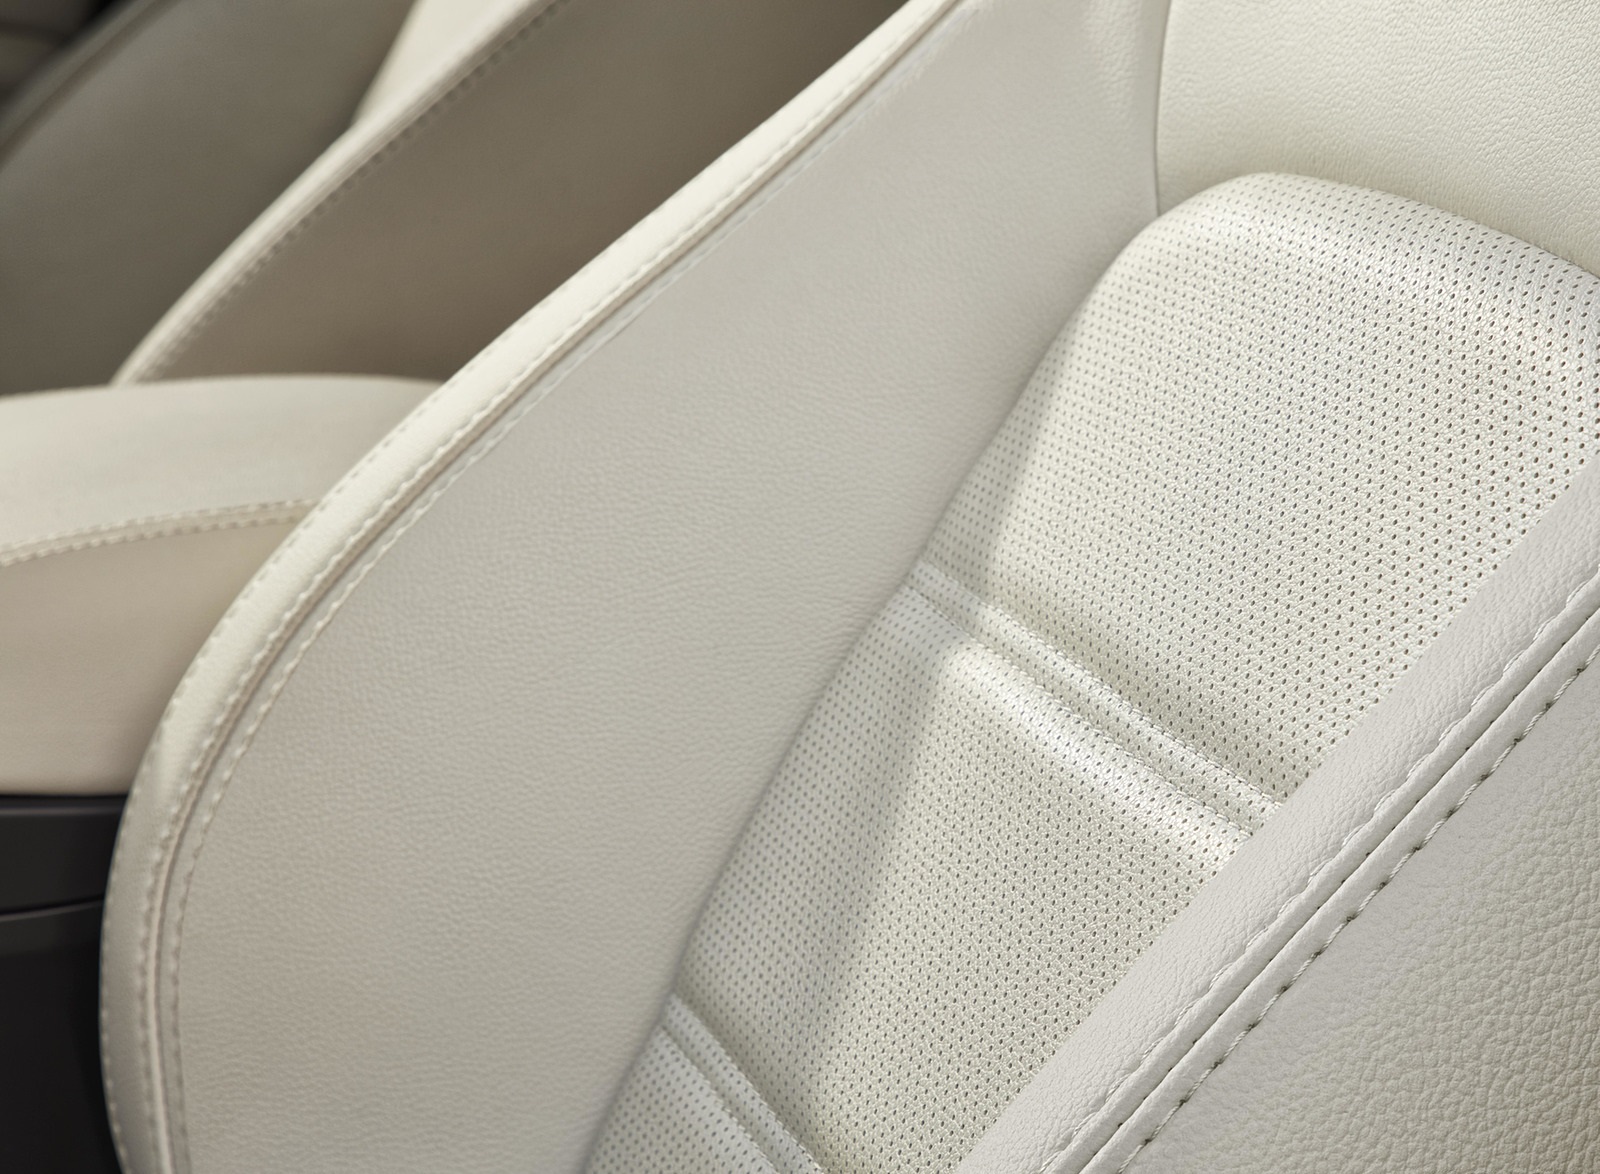 2018 Jaguar E-PACE Interior Seats Wallpapers #83 of 100